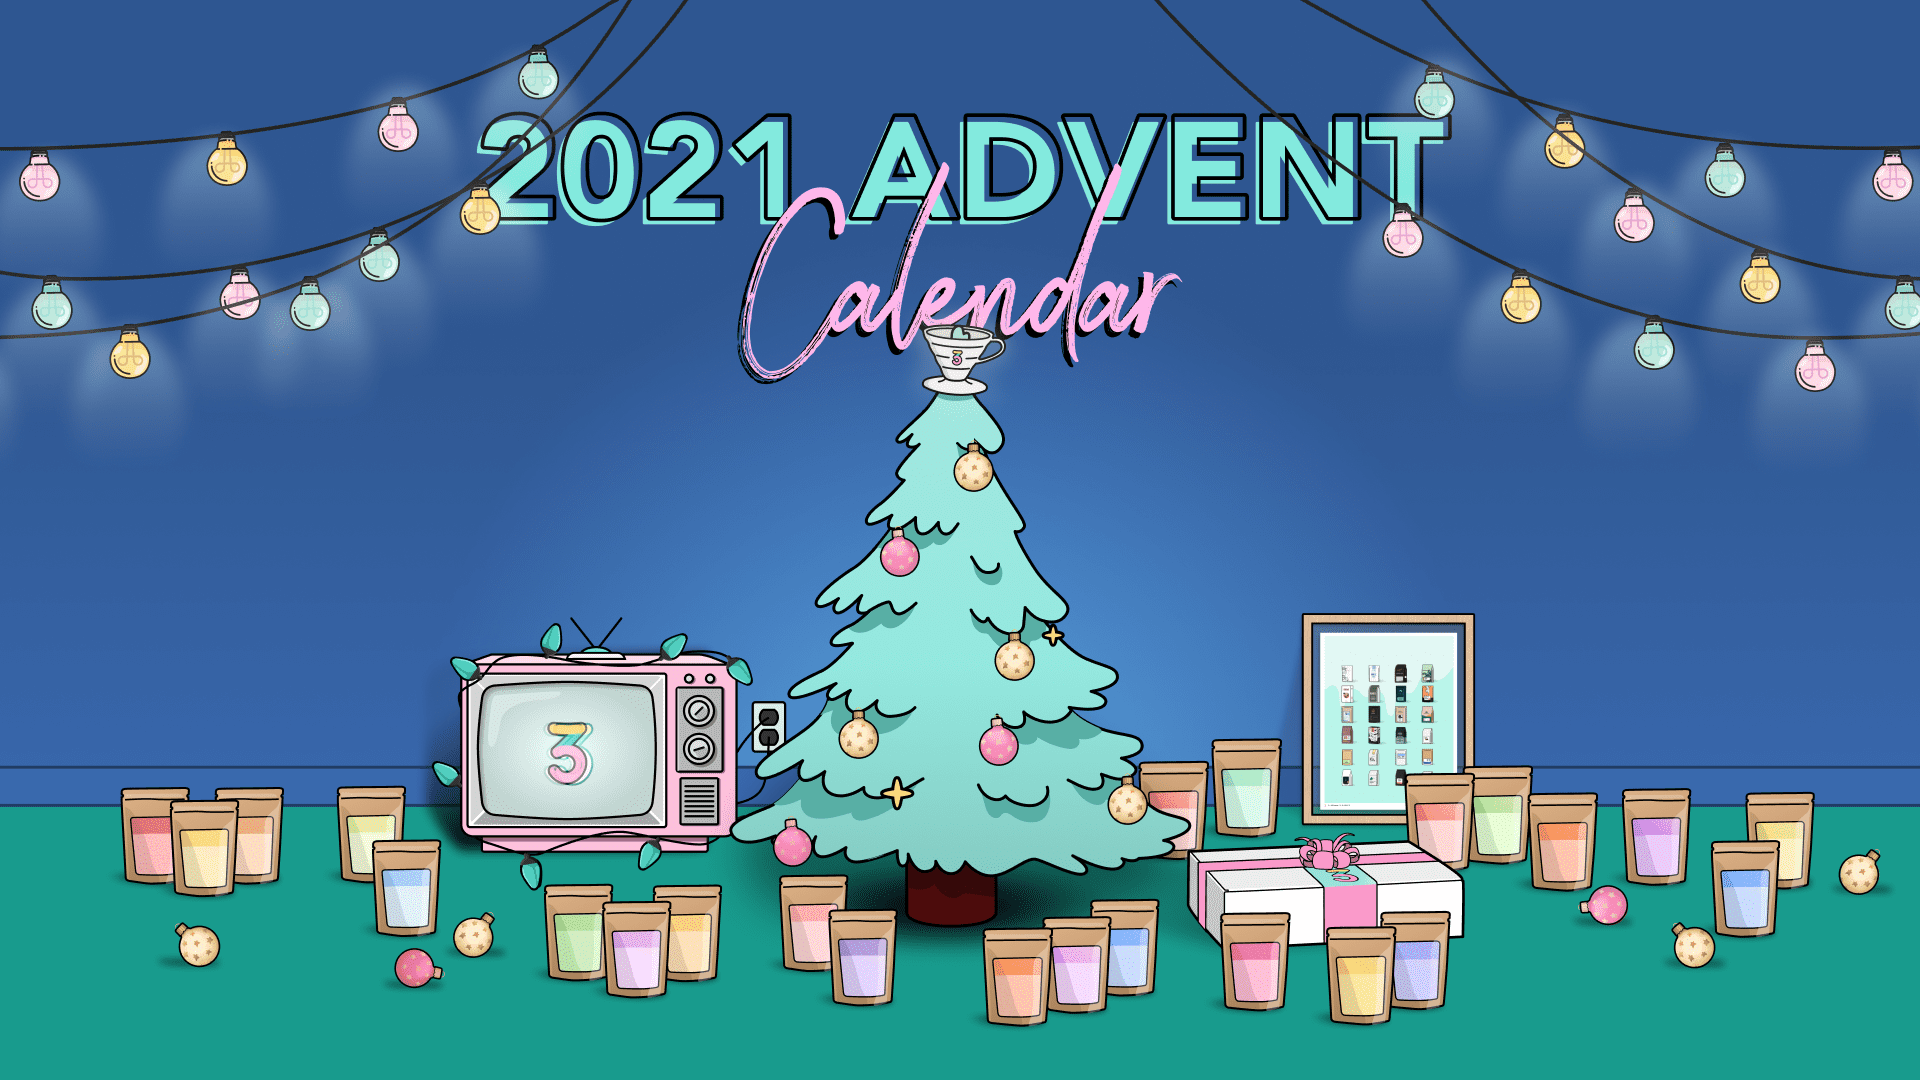 2021 Advent calendar